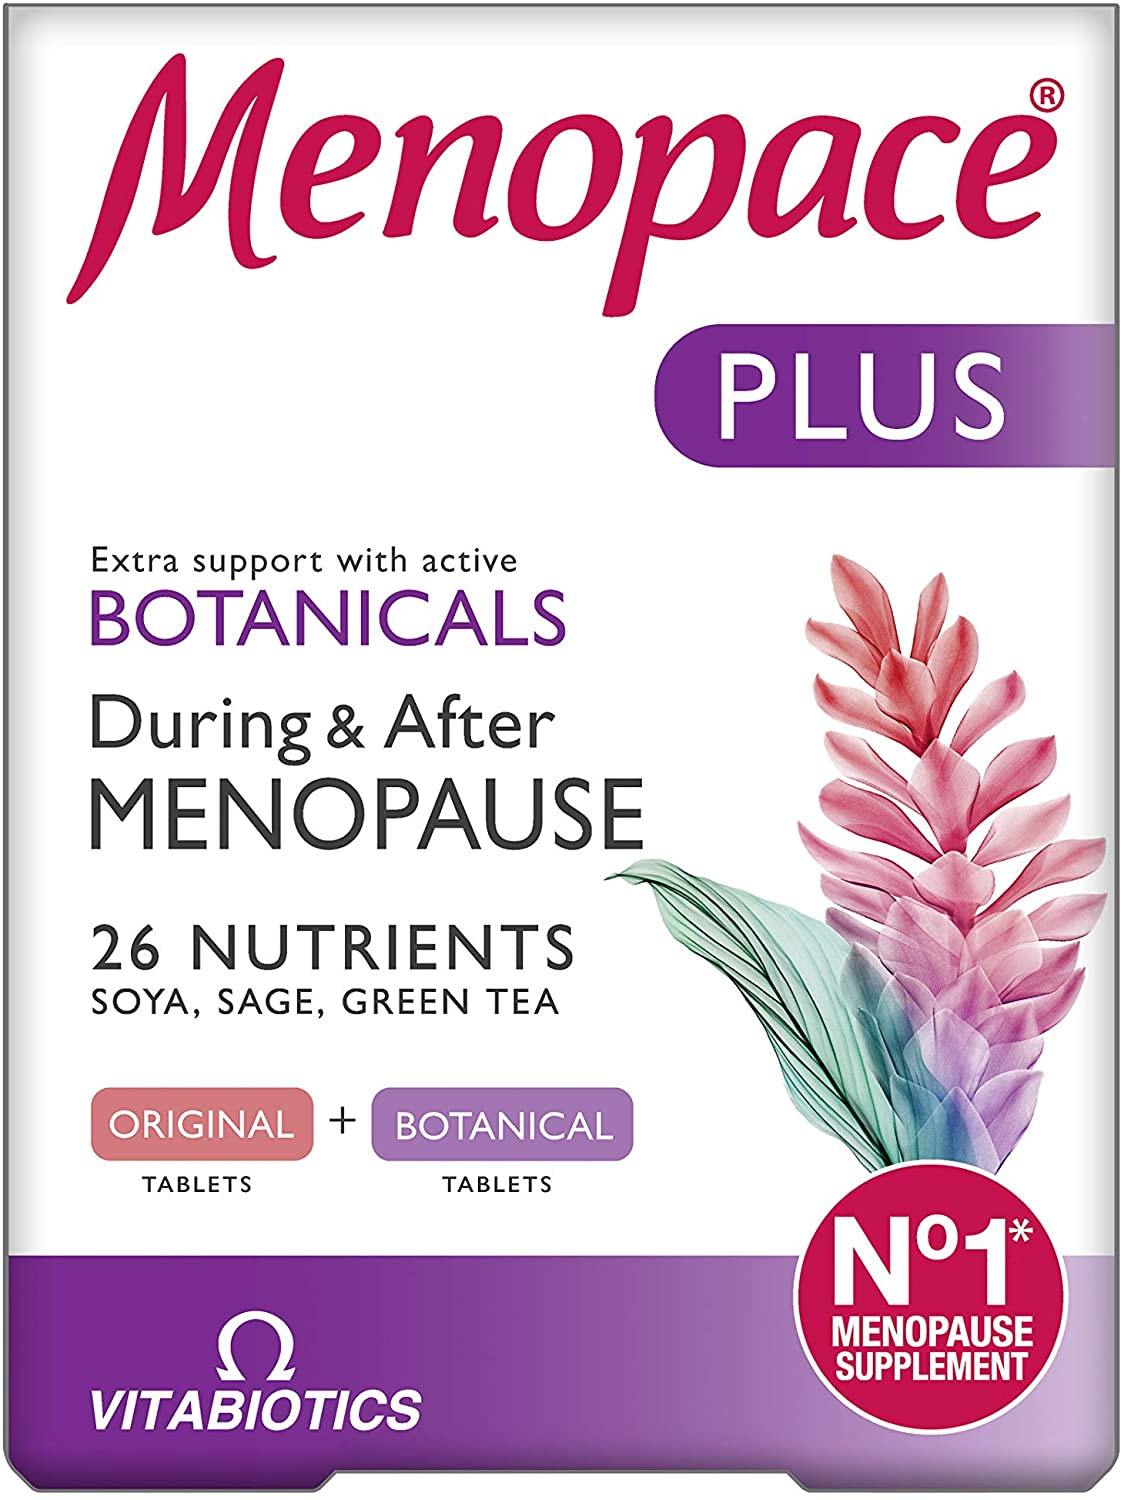 Vitabiotics Menopace Plus Tablets for Menopause